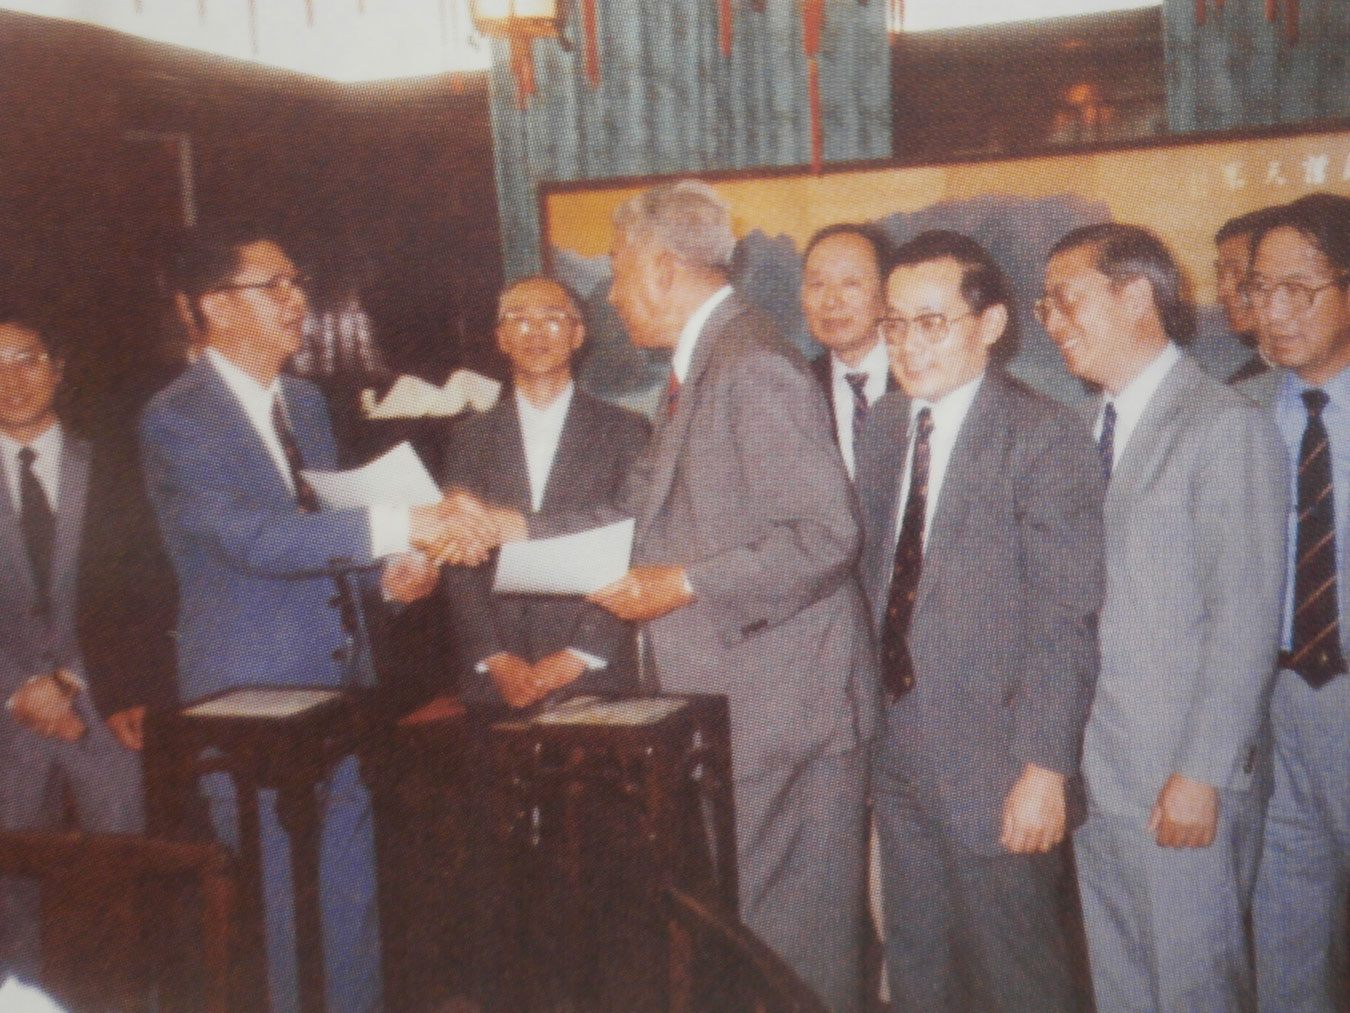 CUHK and the University of Peking on exchange programmes (1984)